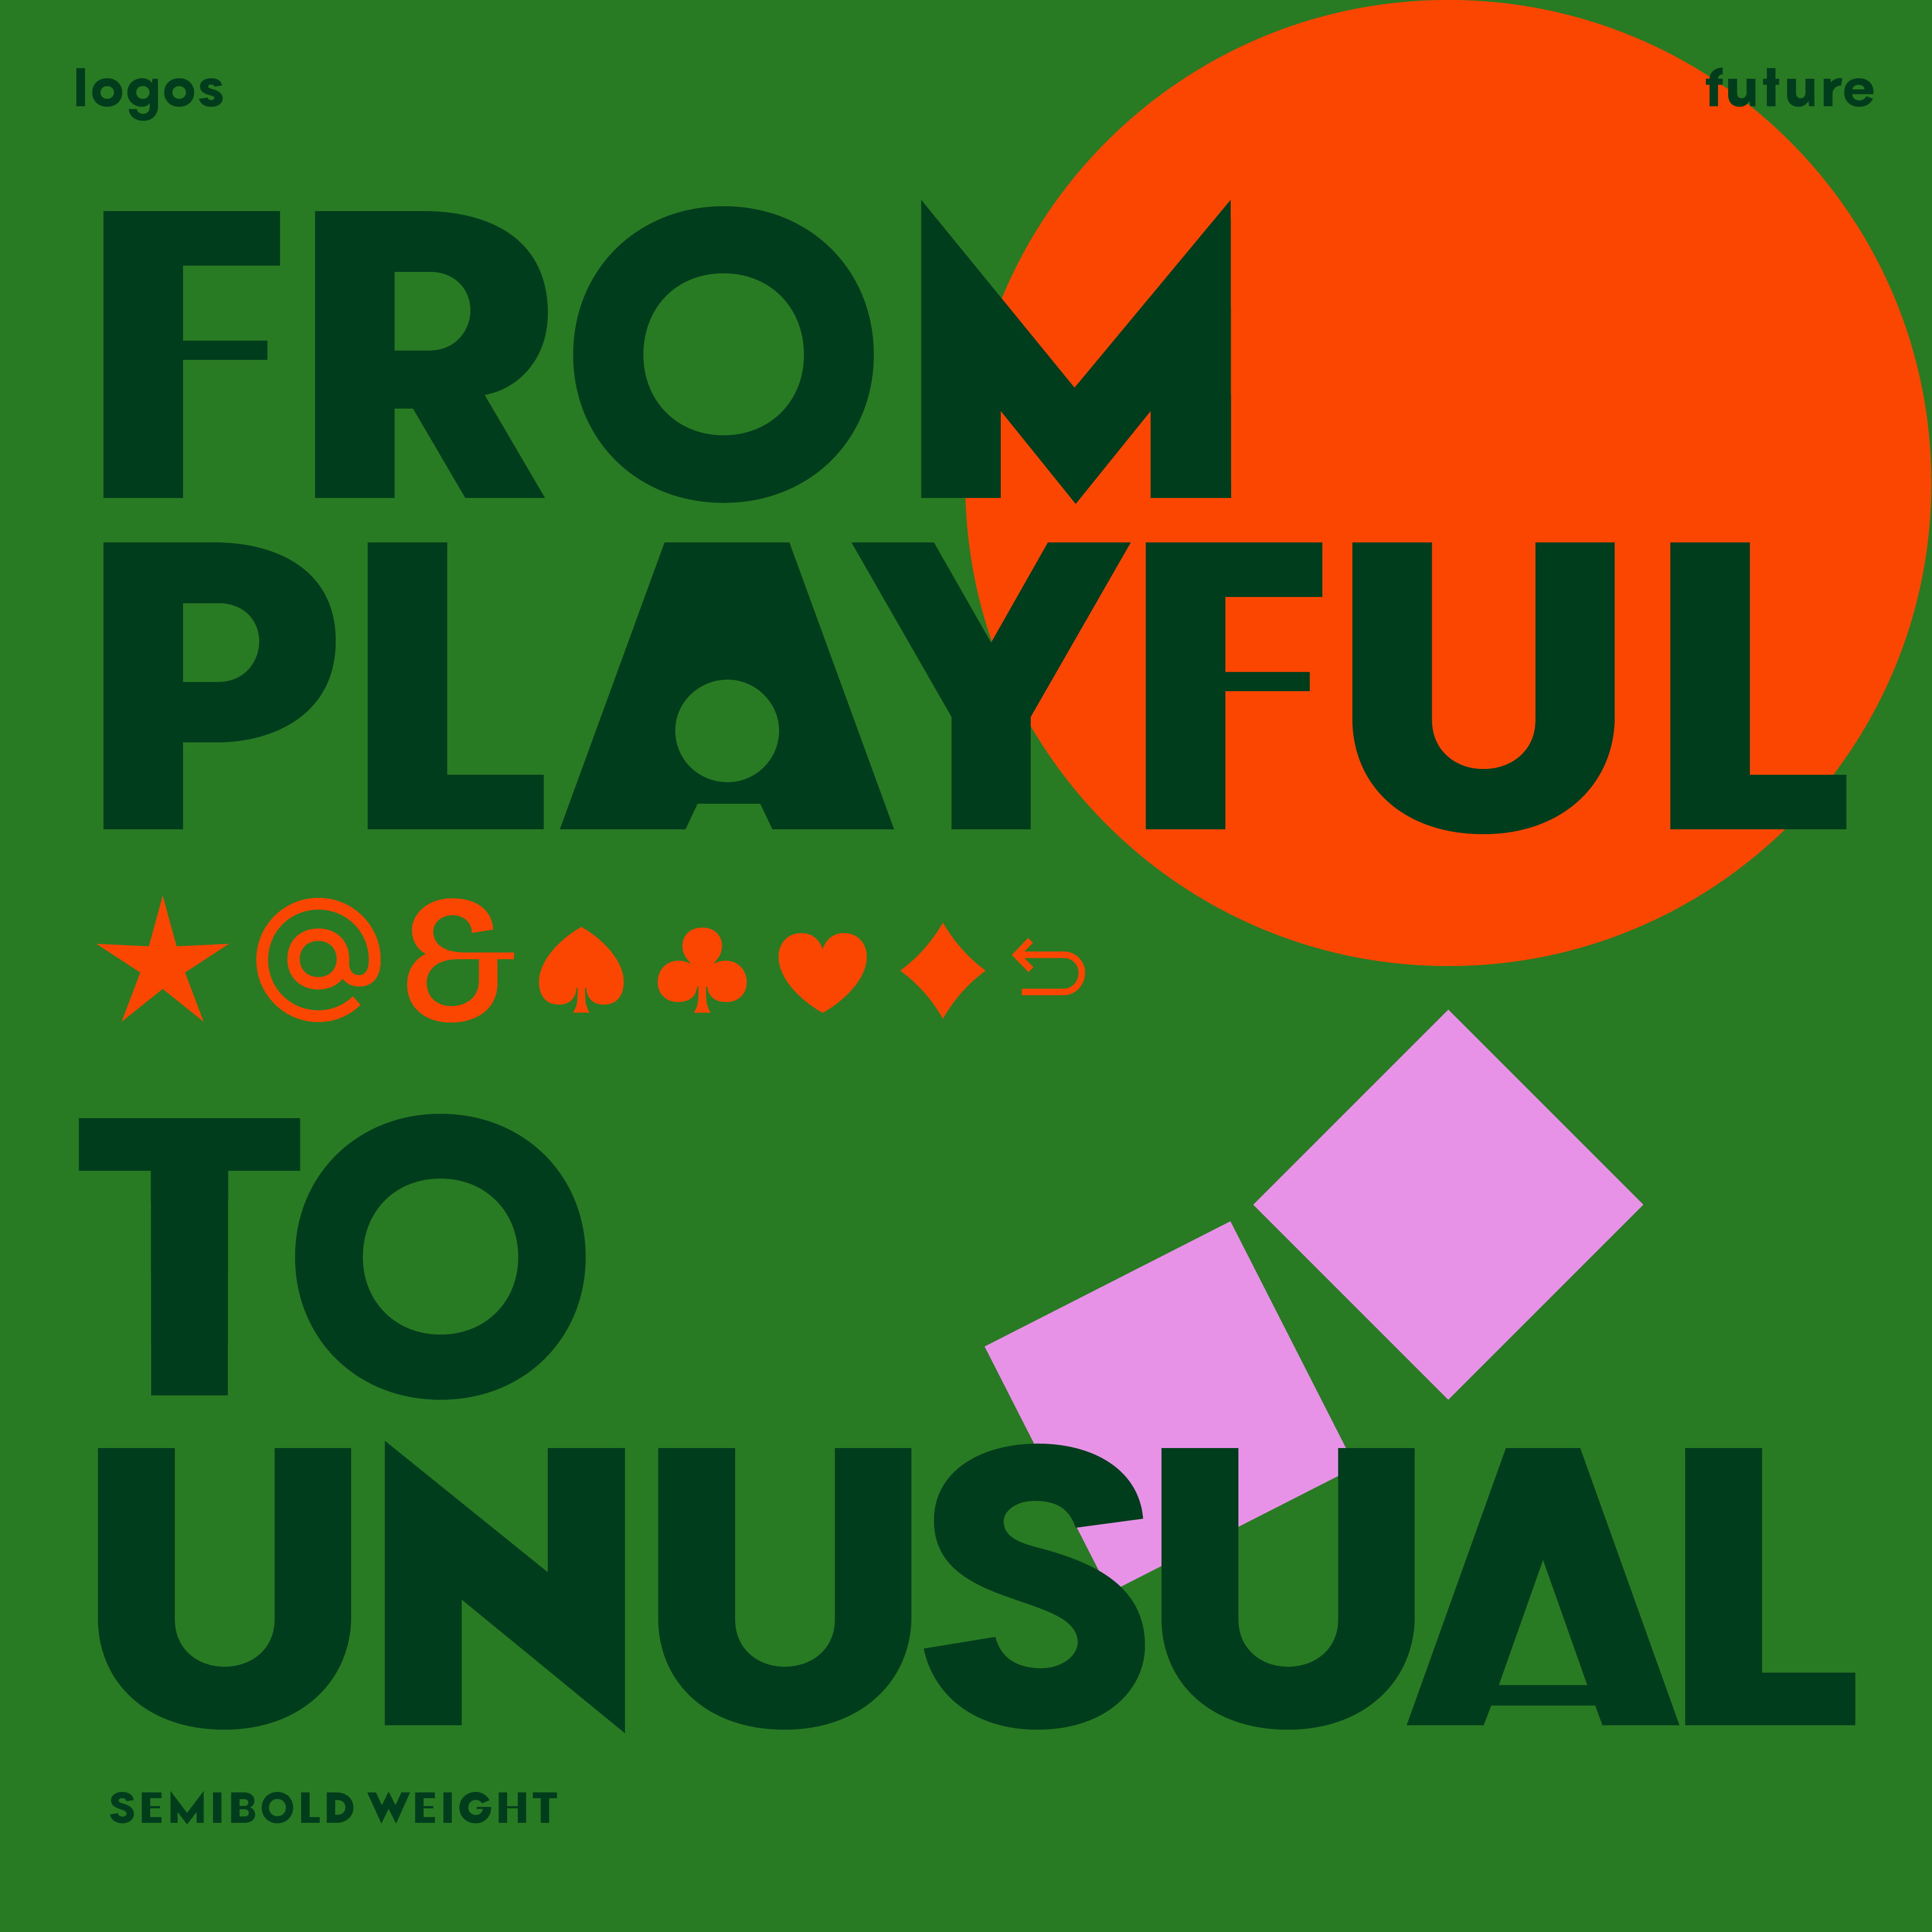 Bauhaus Bool—Playful font with an edge